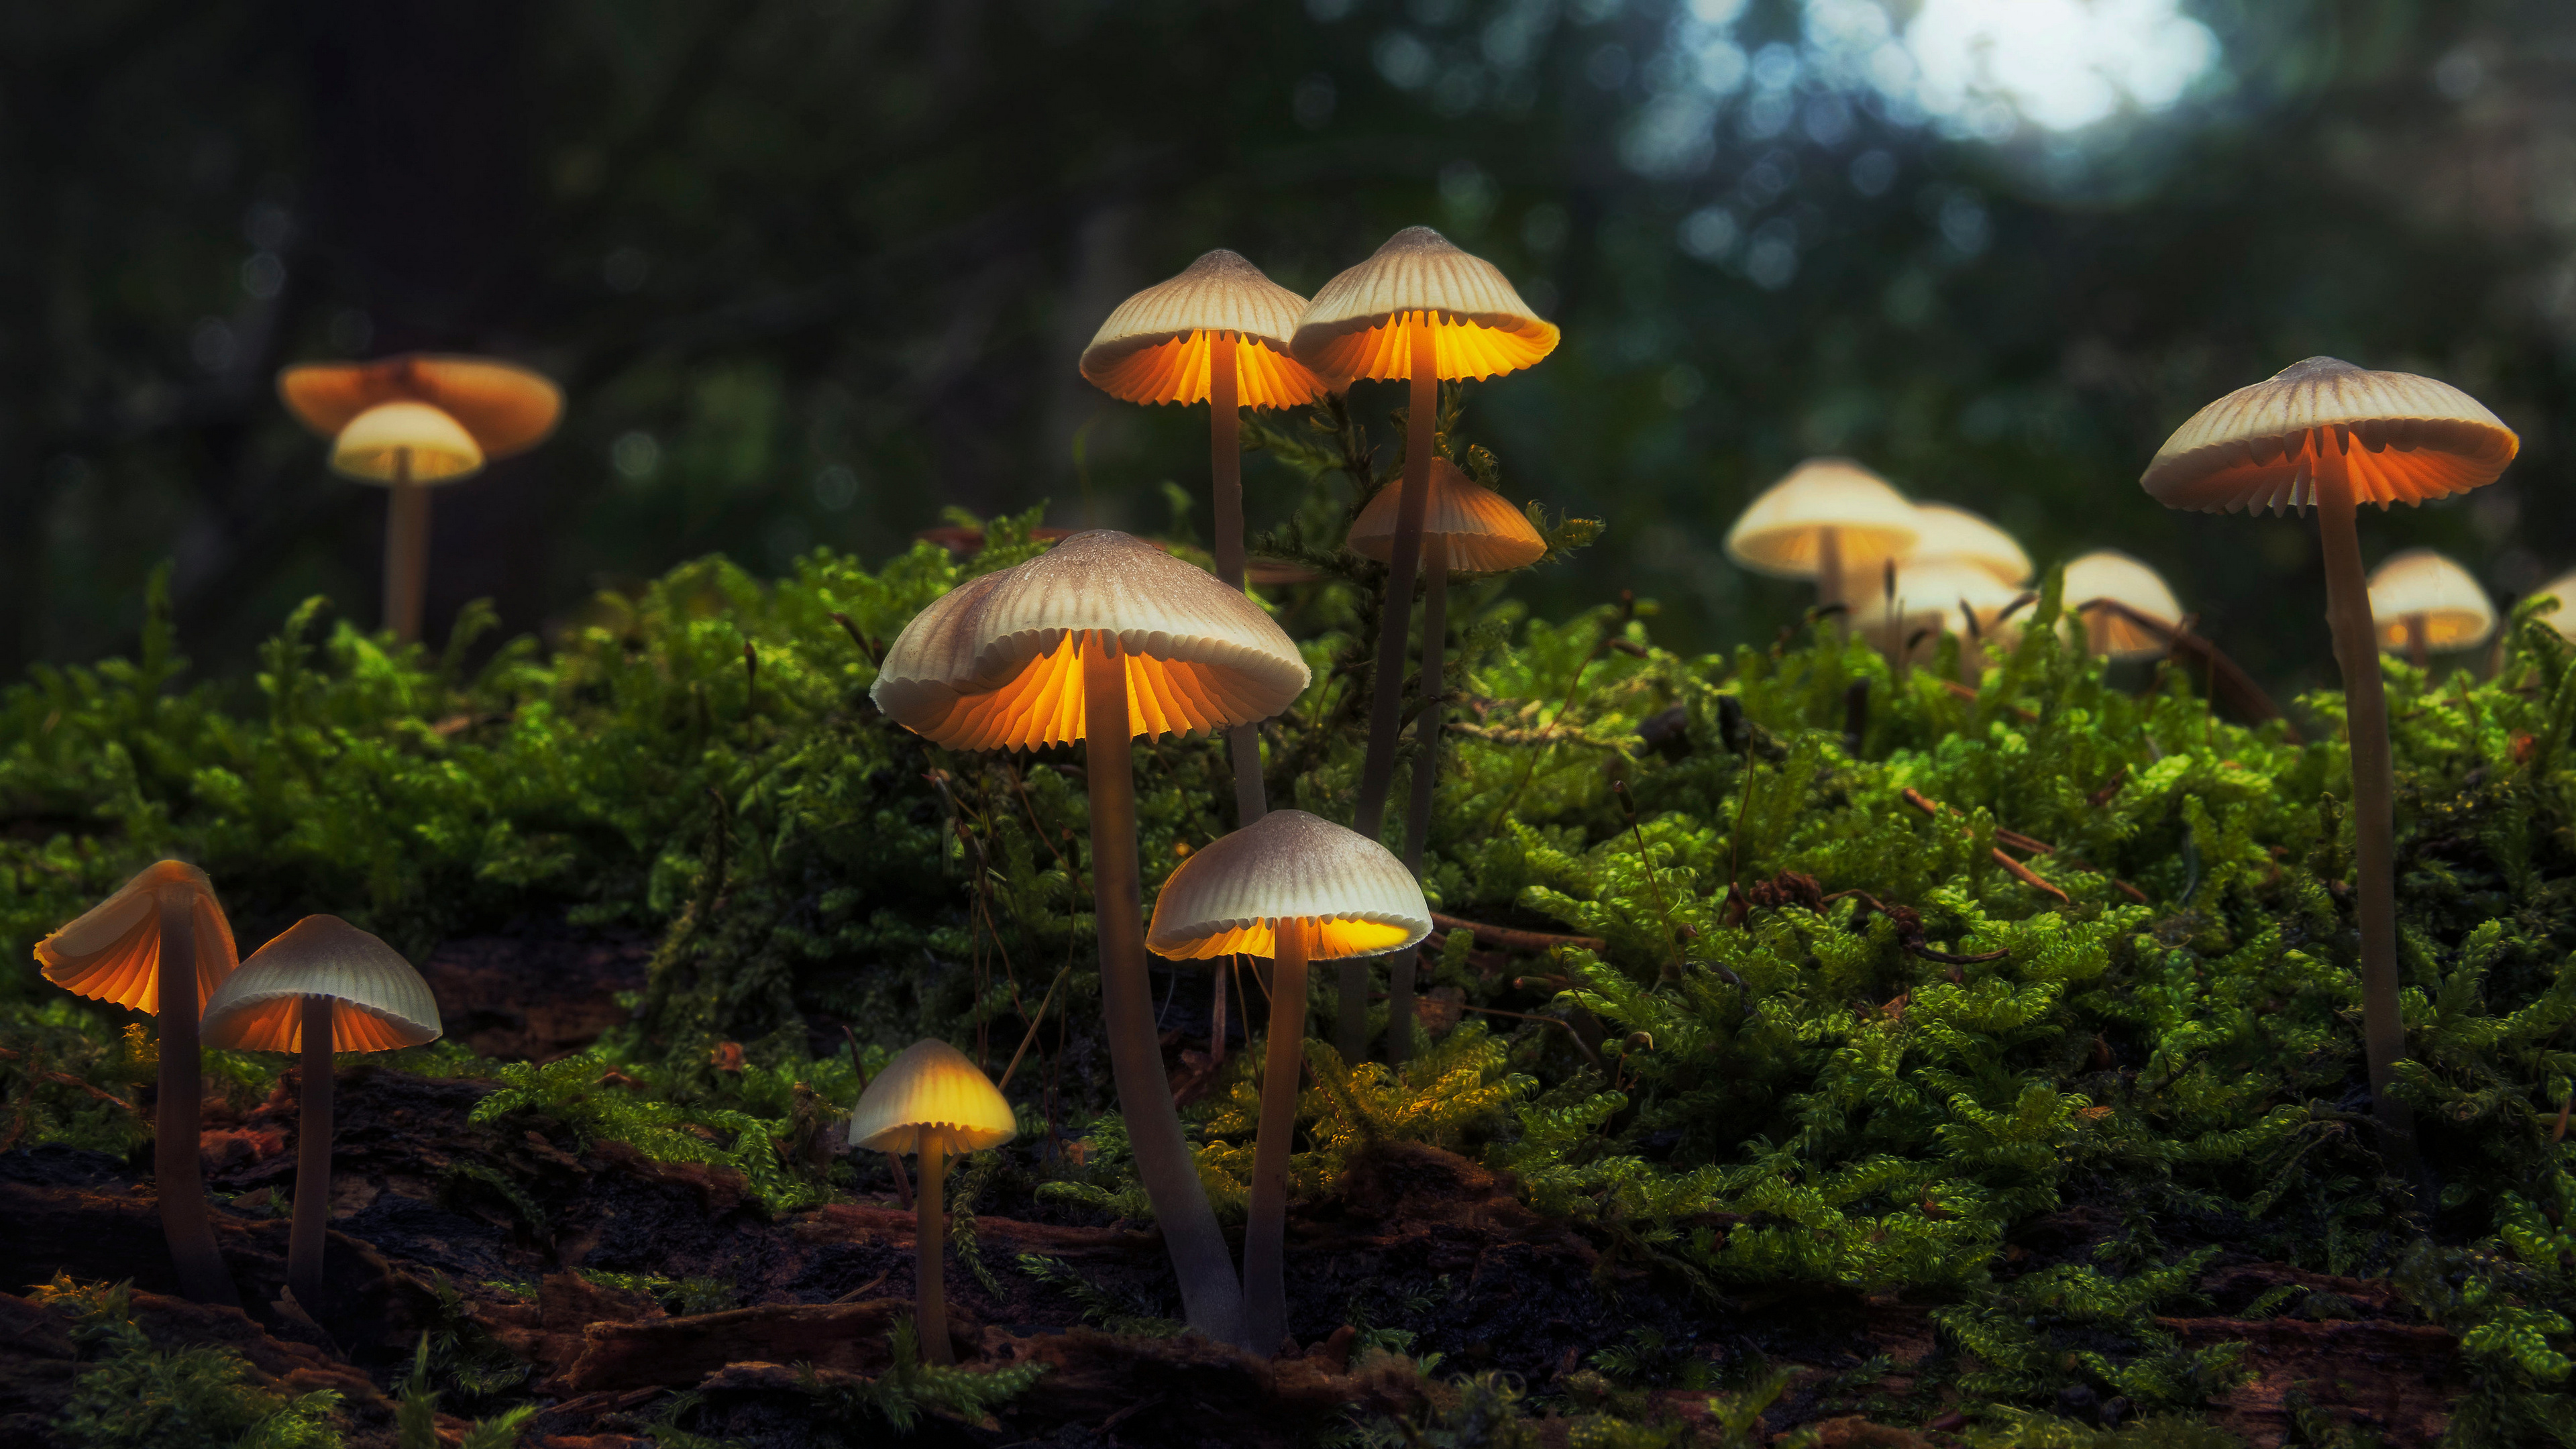 General 3840x2160 mushroom nature forest moss blurred